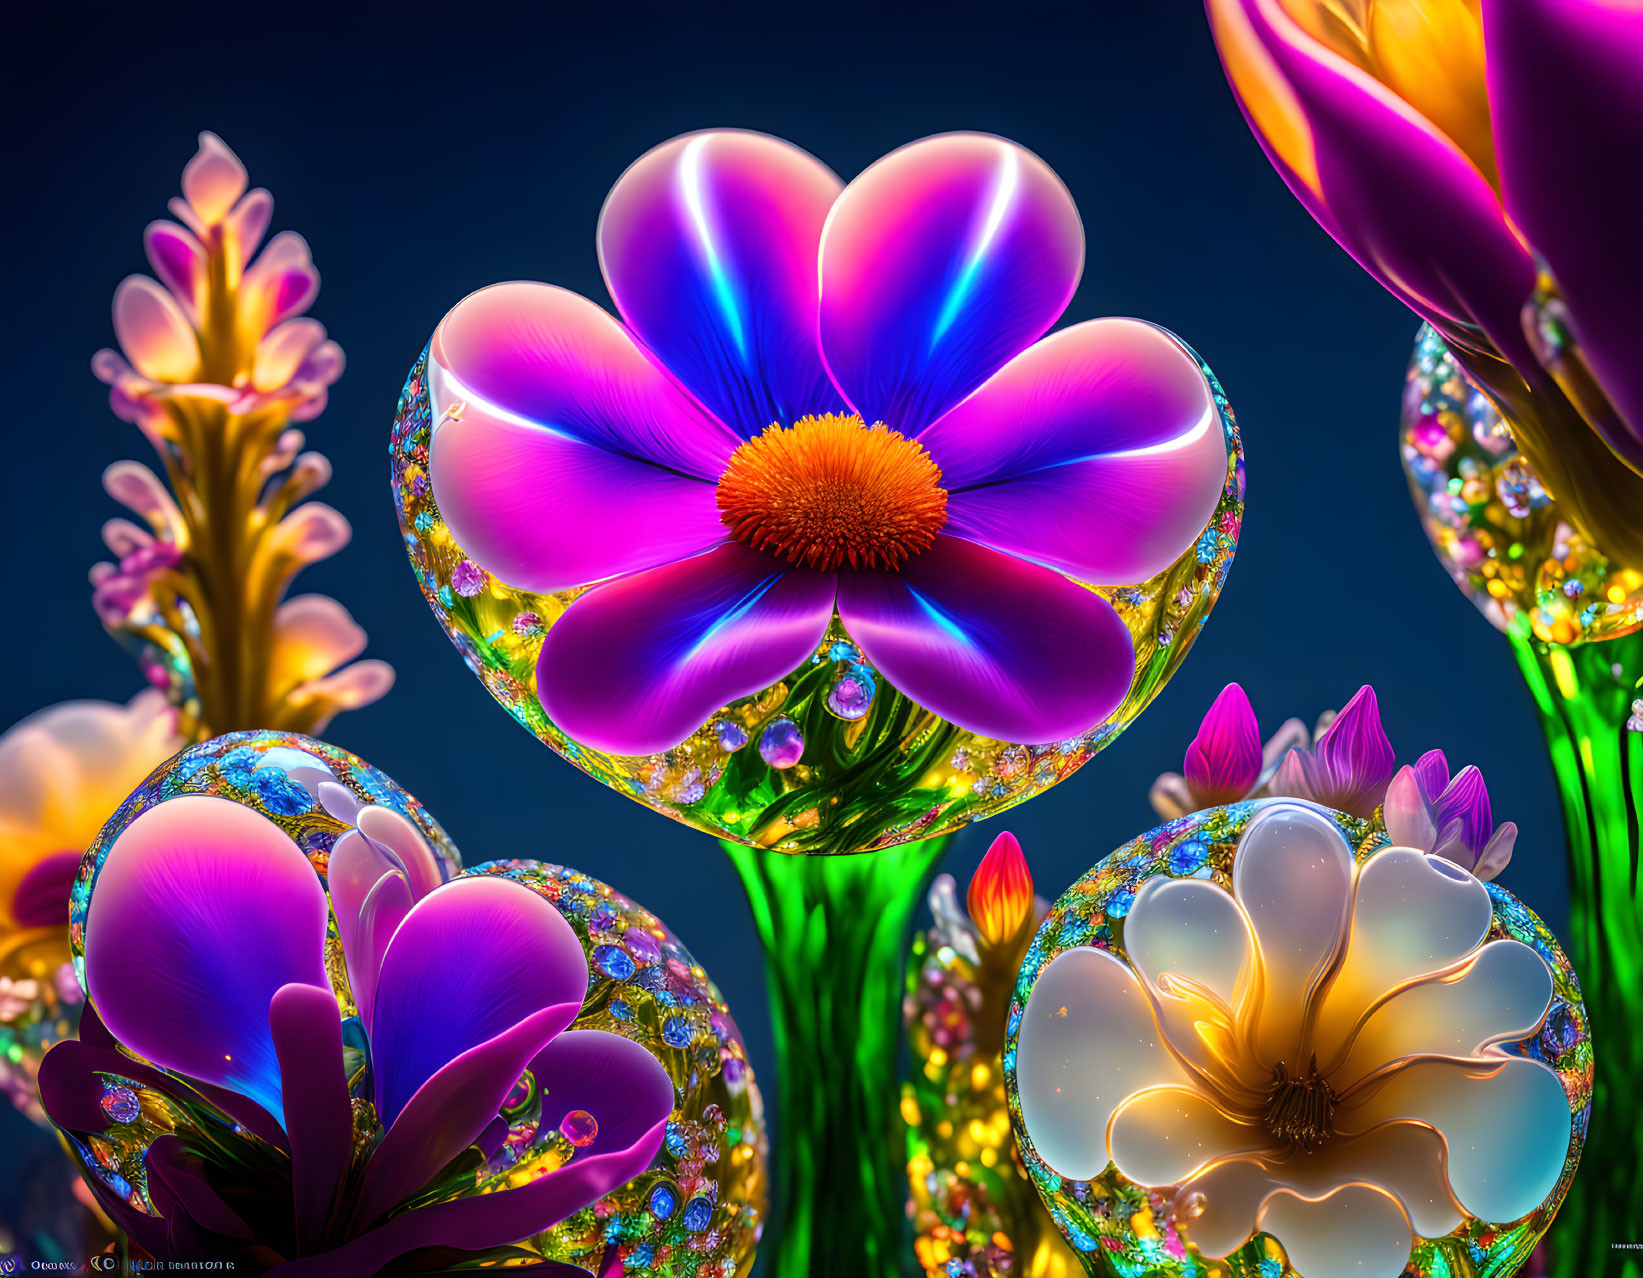 Fantastical flowers with iridescent petals on dark blue - Stunning Digital Artwork